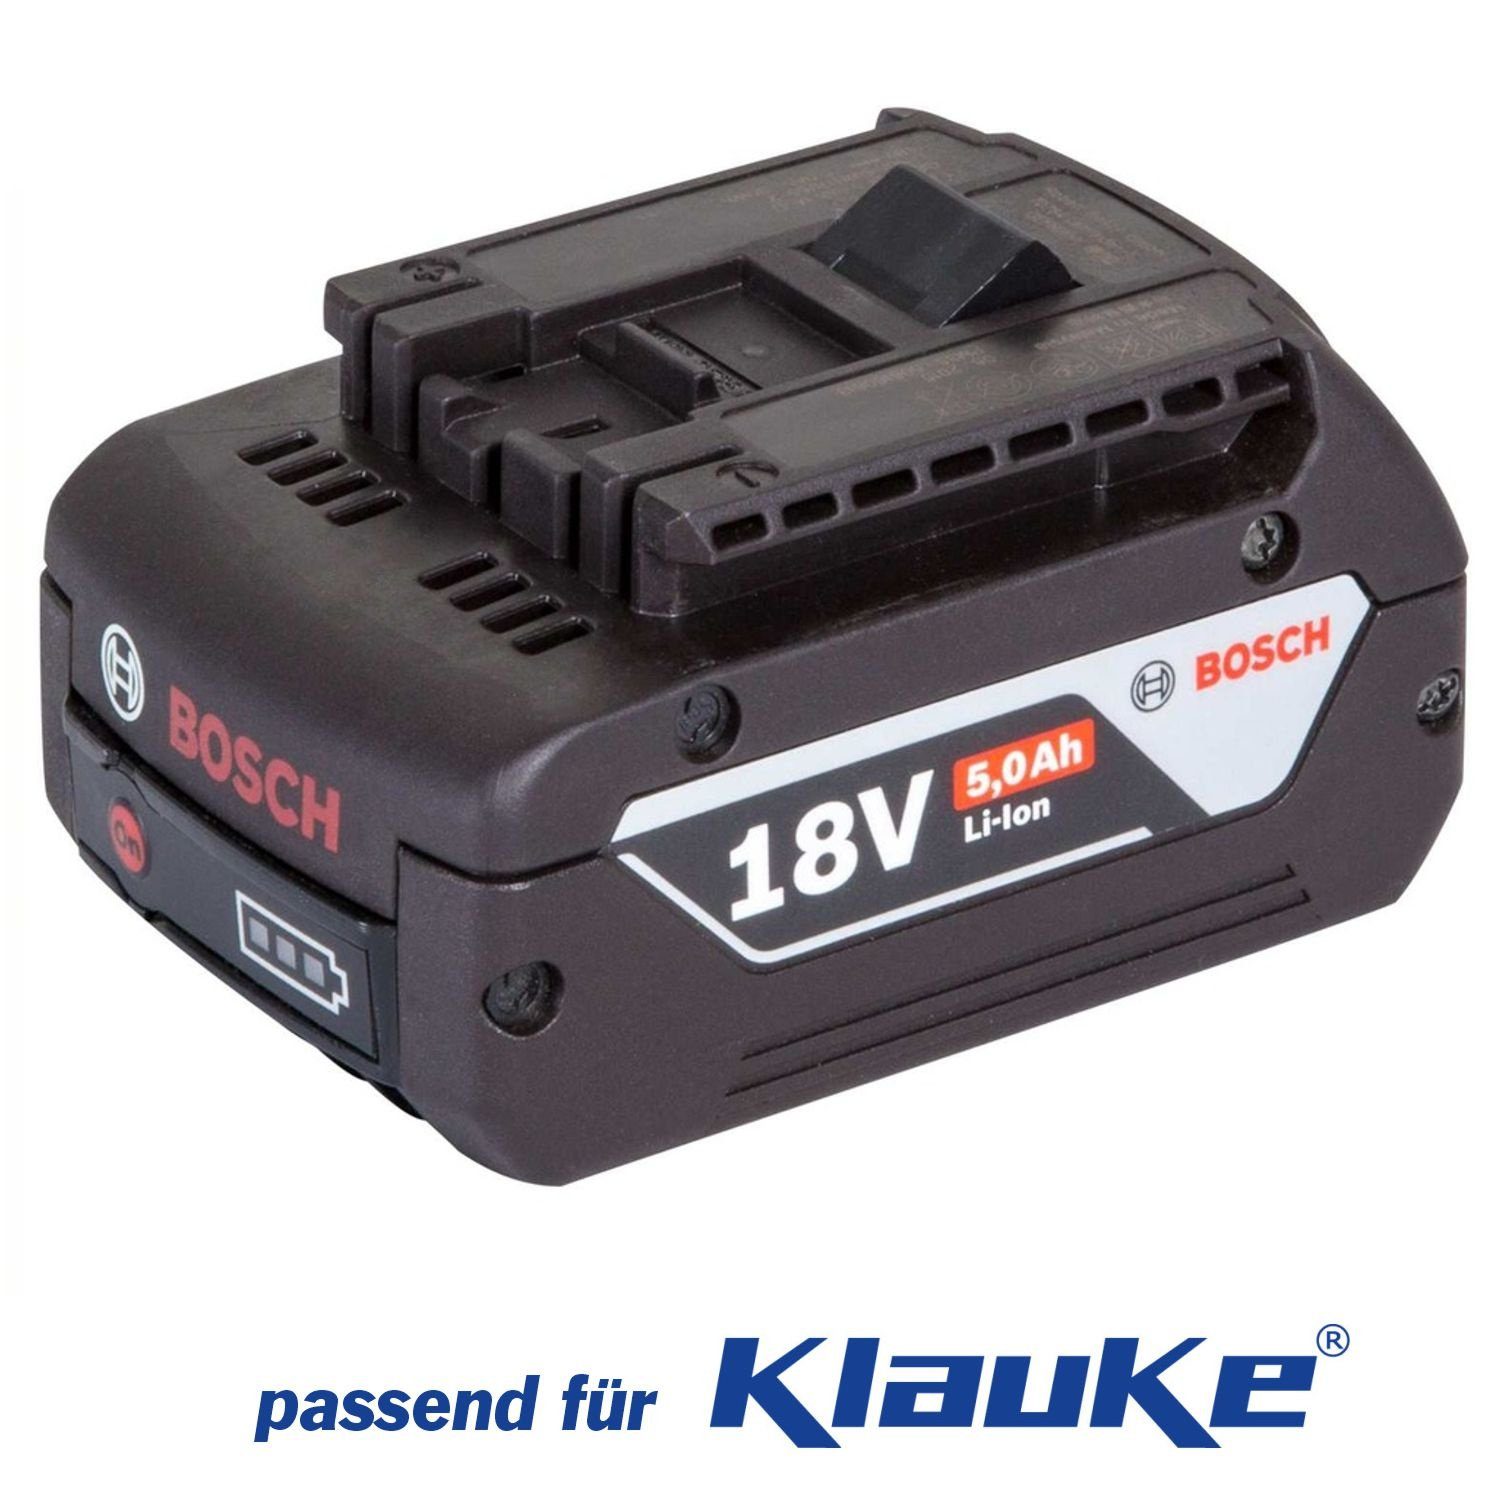 BOSCH Klauke RAL B2 EU Bosch Batterie 18 V / 5.0 Ah, Li-Ion Akku 5000 mAh